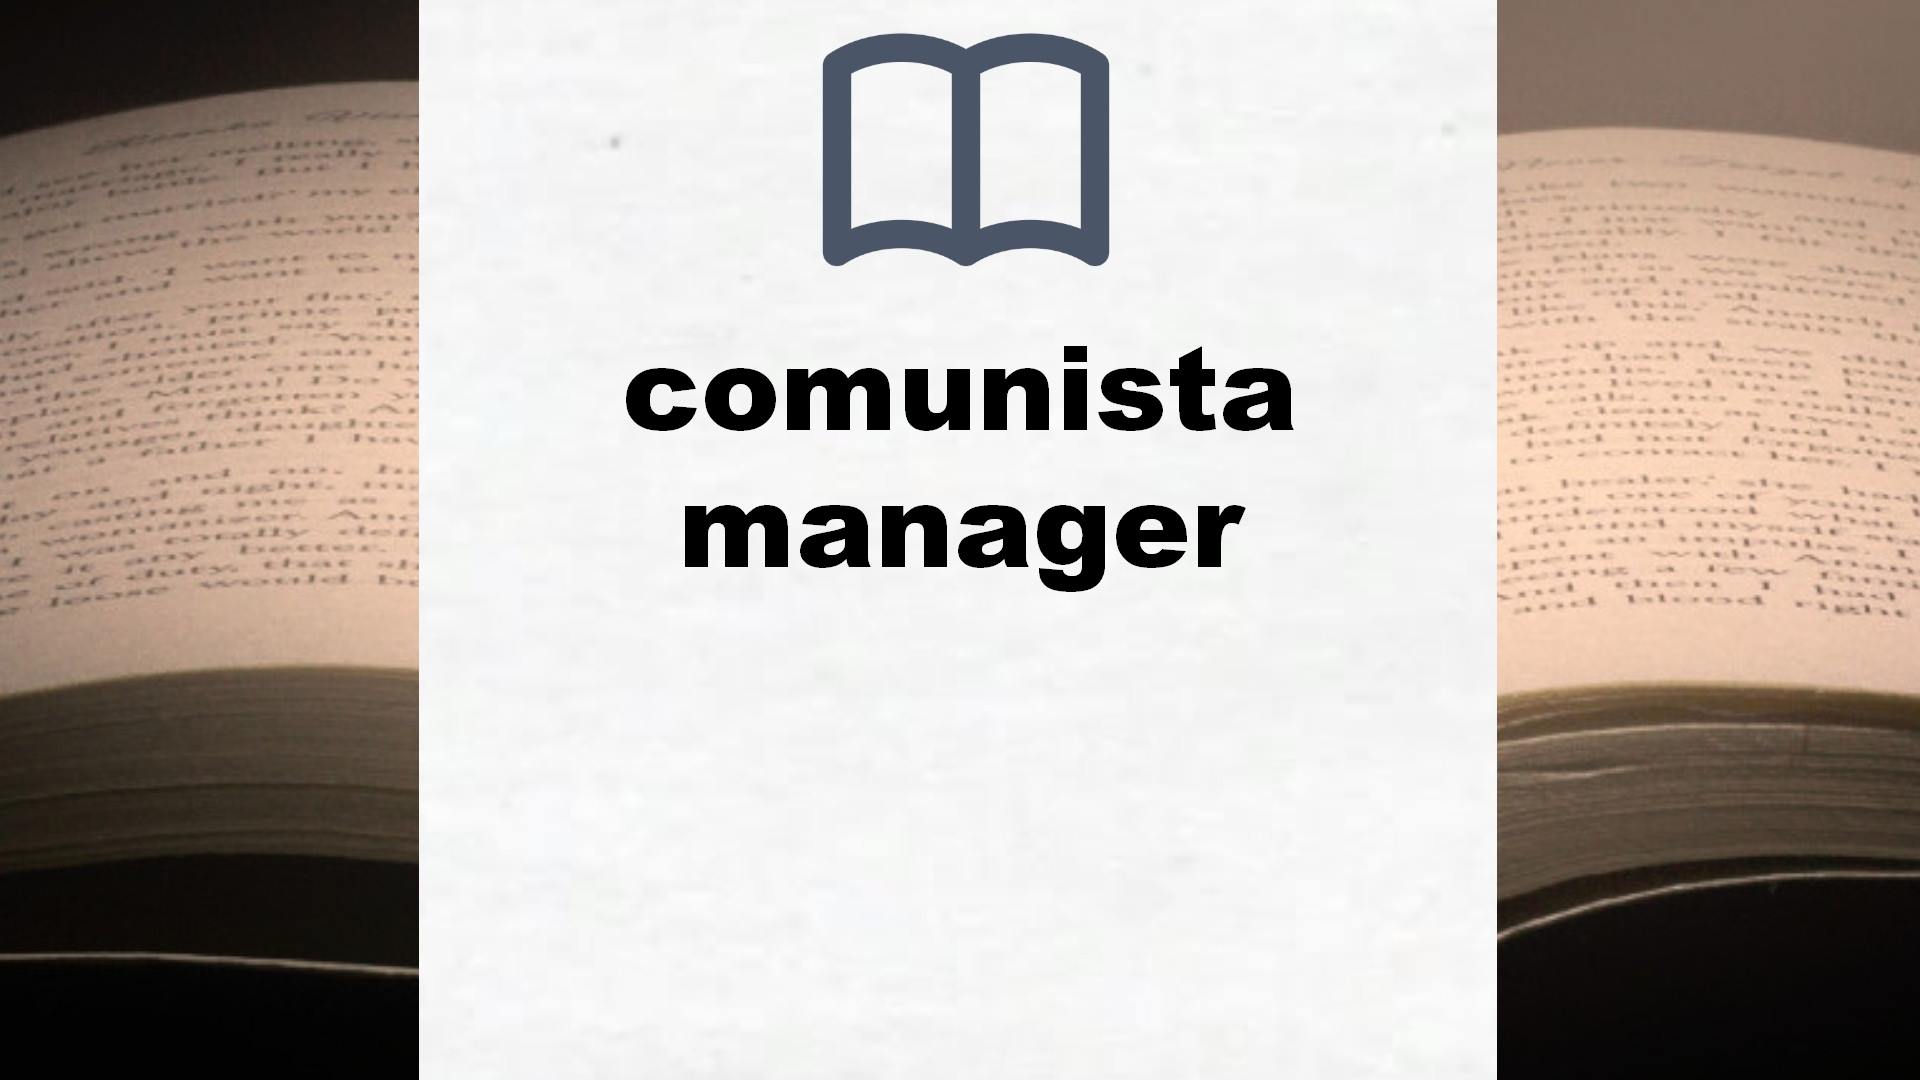 Libros sobre comunista manager